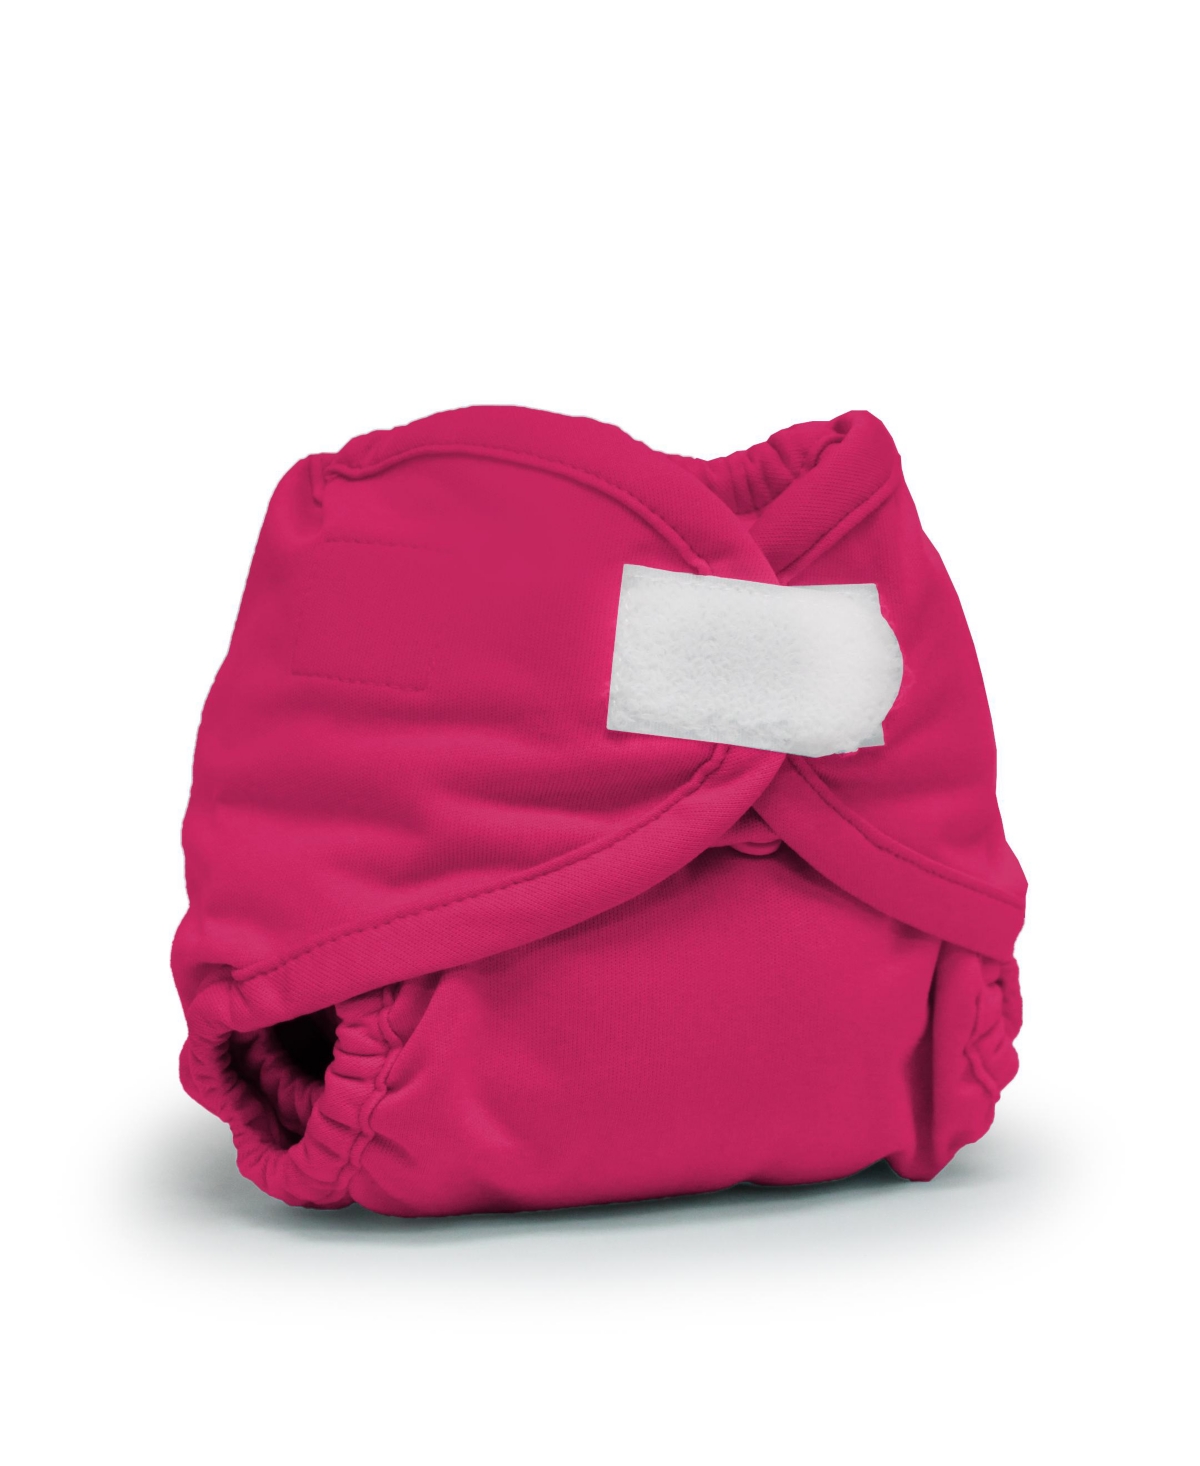 Kanga Care Babies' Rumparooz Reusable Newborn Cloth Diaper Cover Aplix In Pink